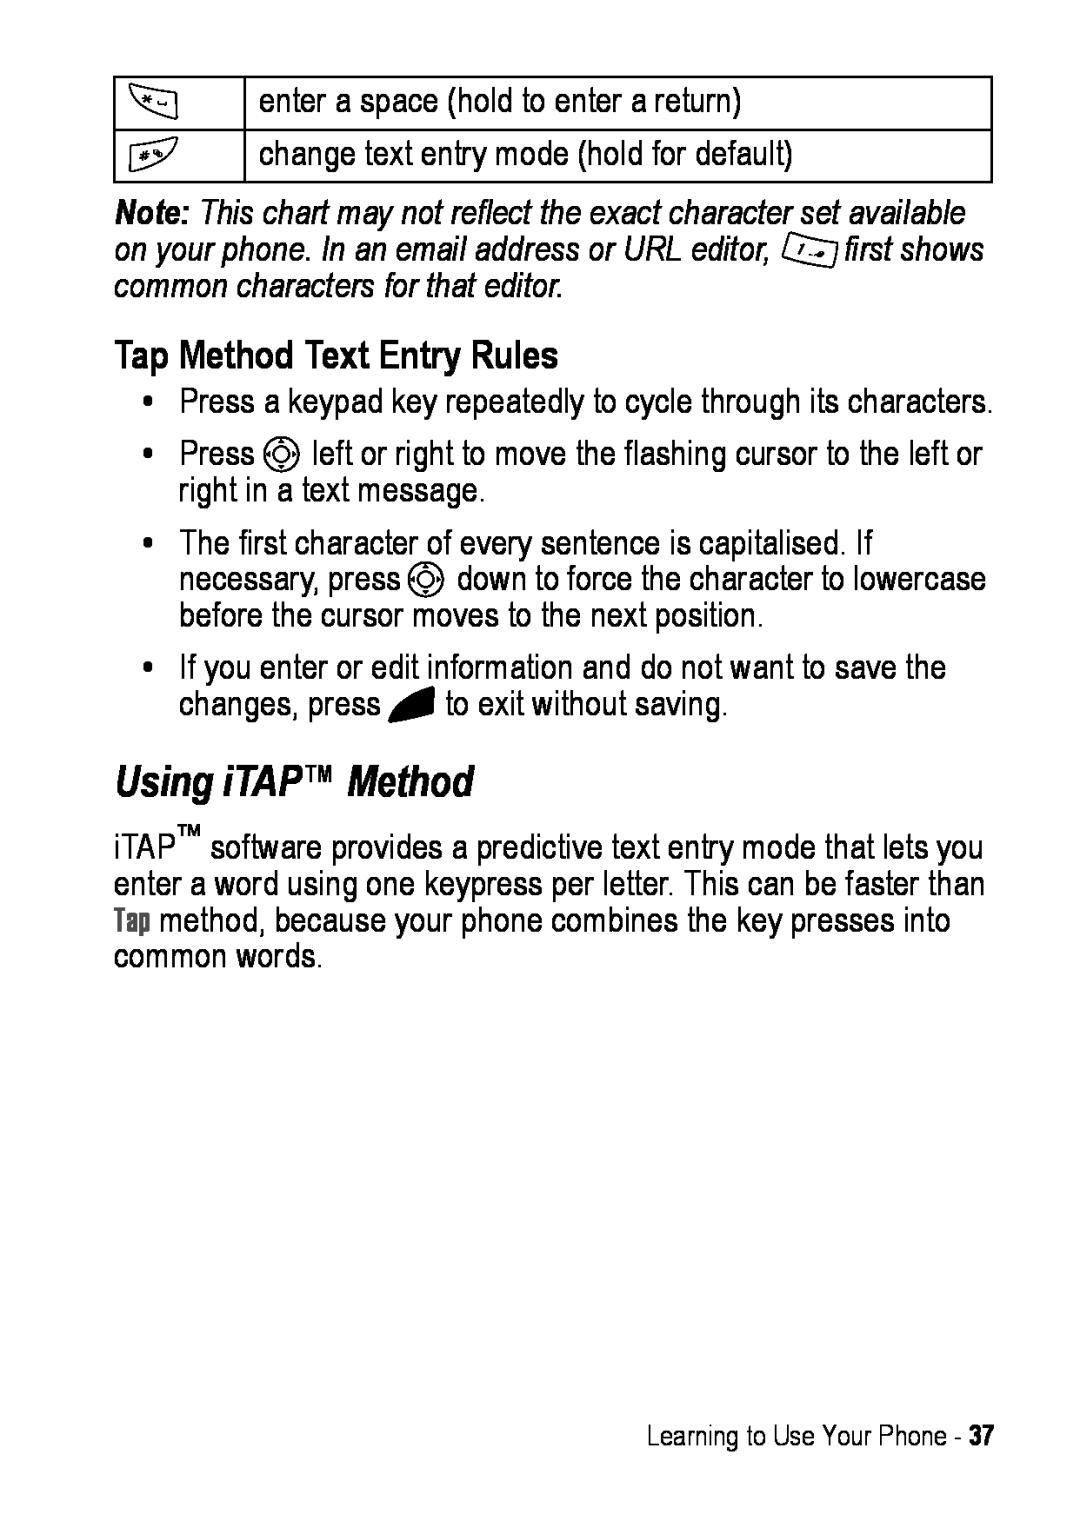 Motorola C390 manual Using iTAP Method, Tap Method Text Entry Rules 